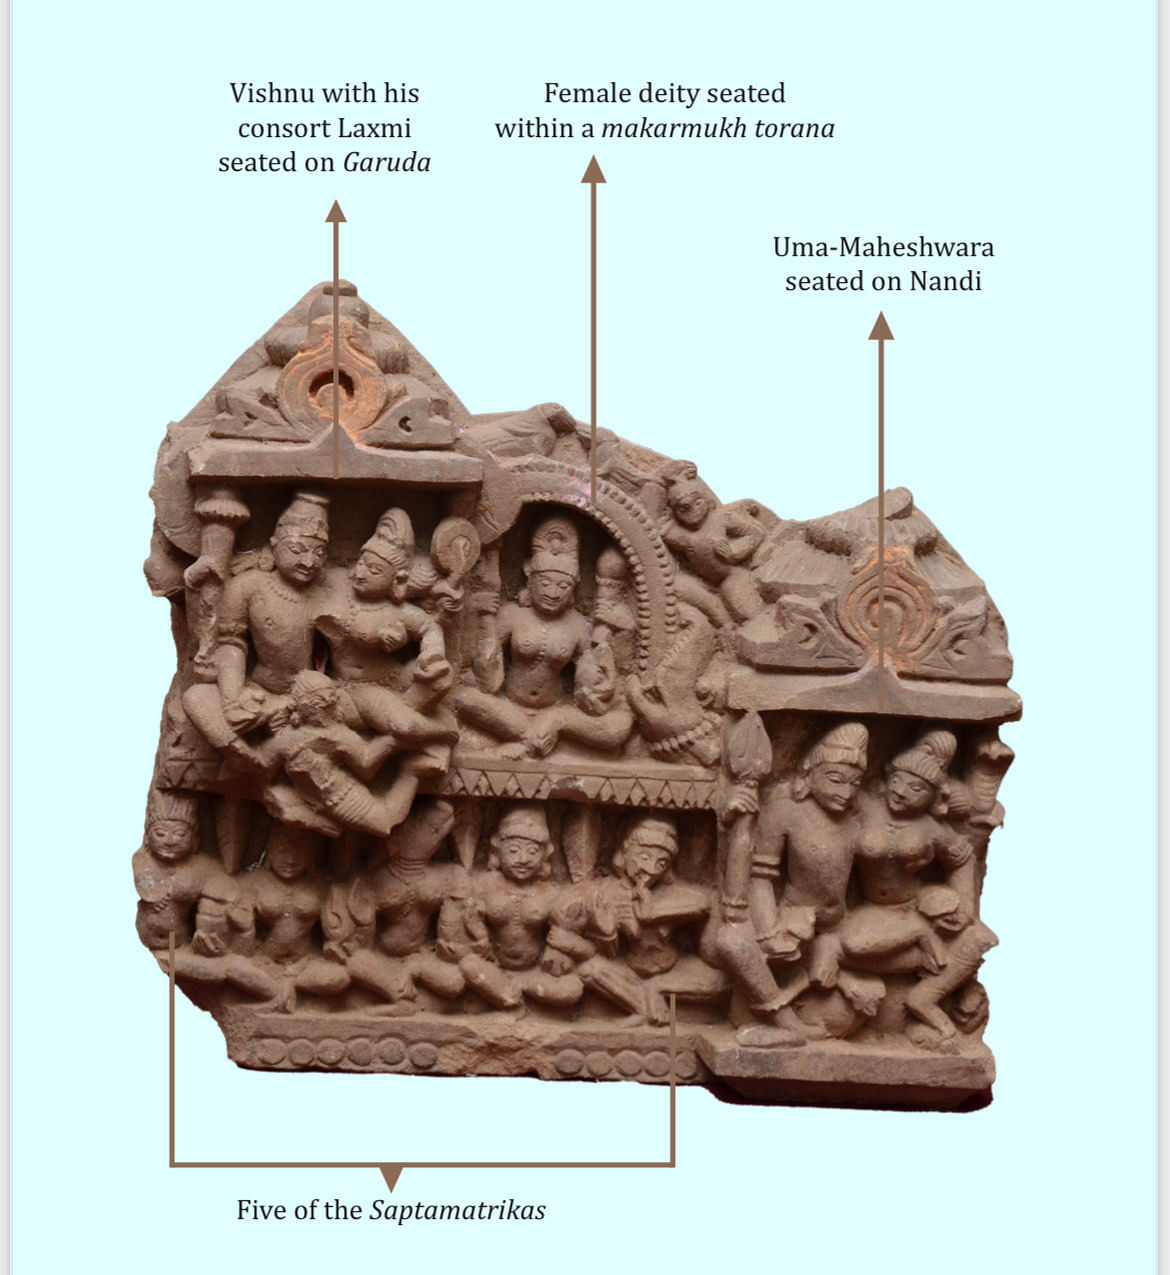 A photo of the lintel depicting Vishnu with his consort and five saptamatrikas.